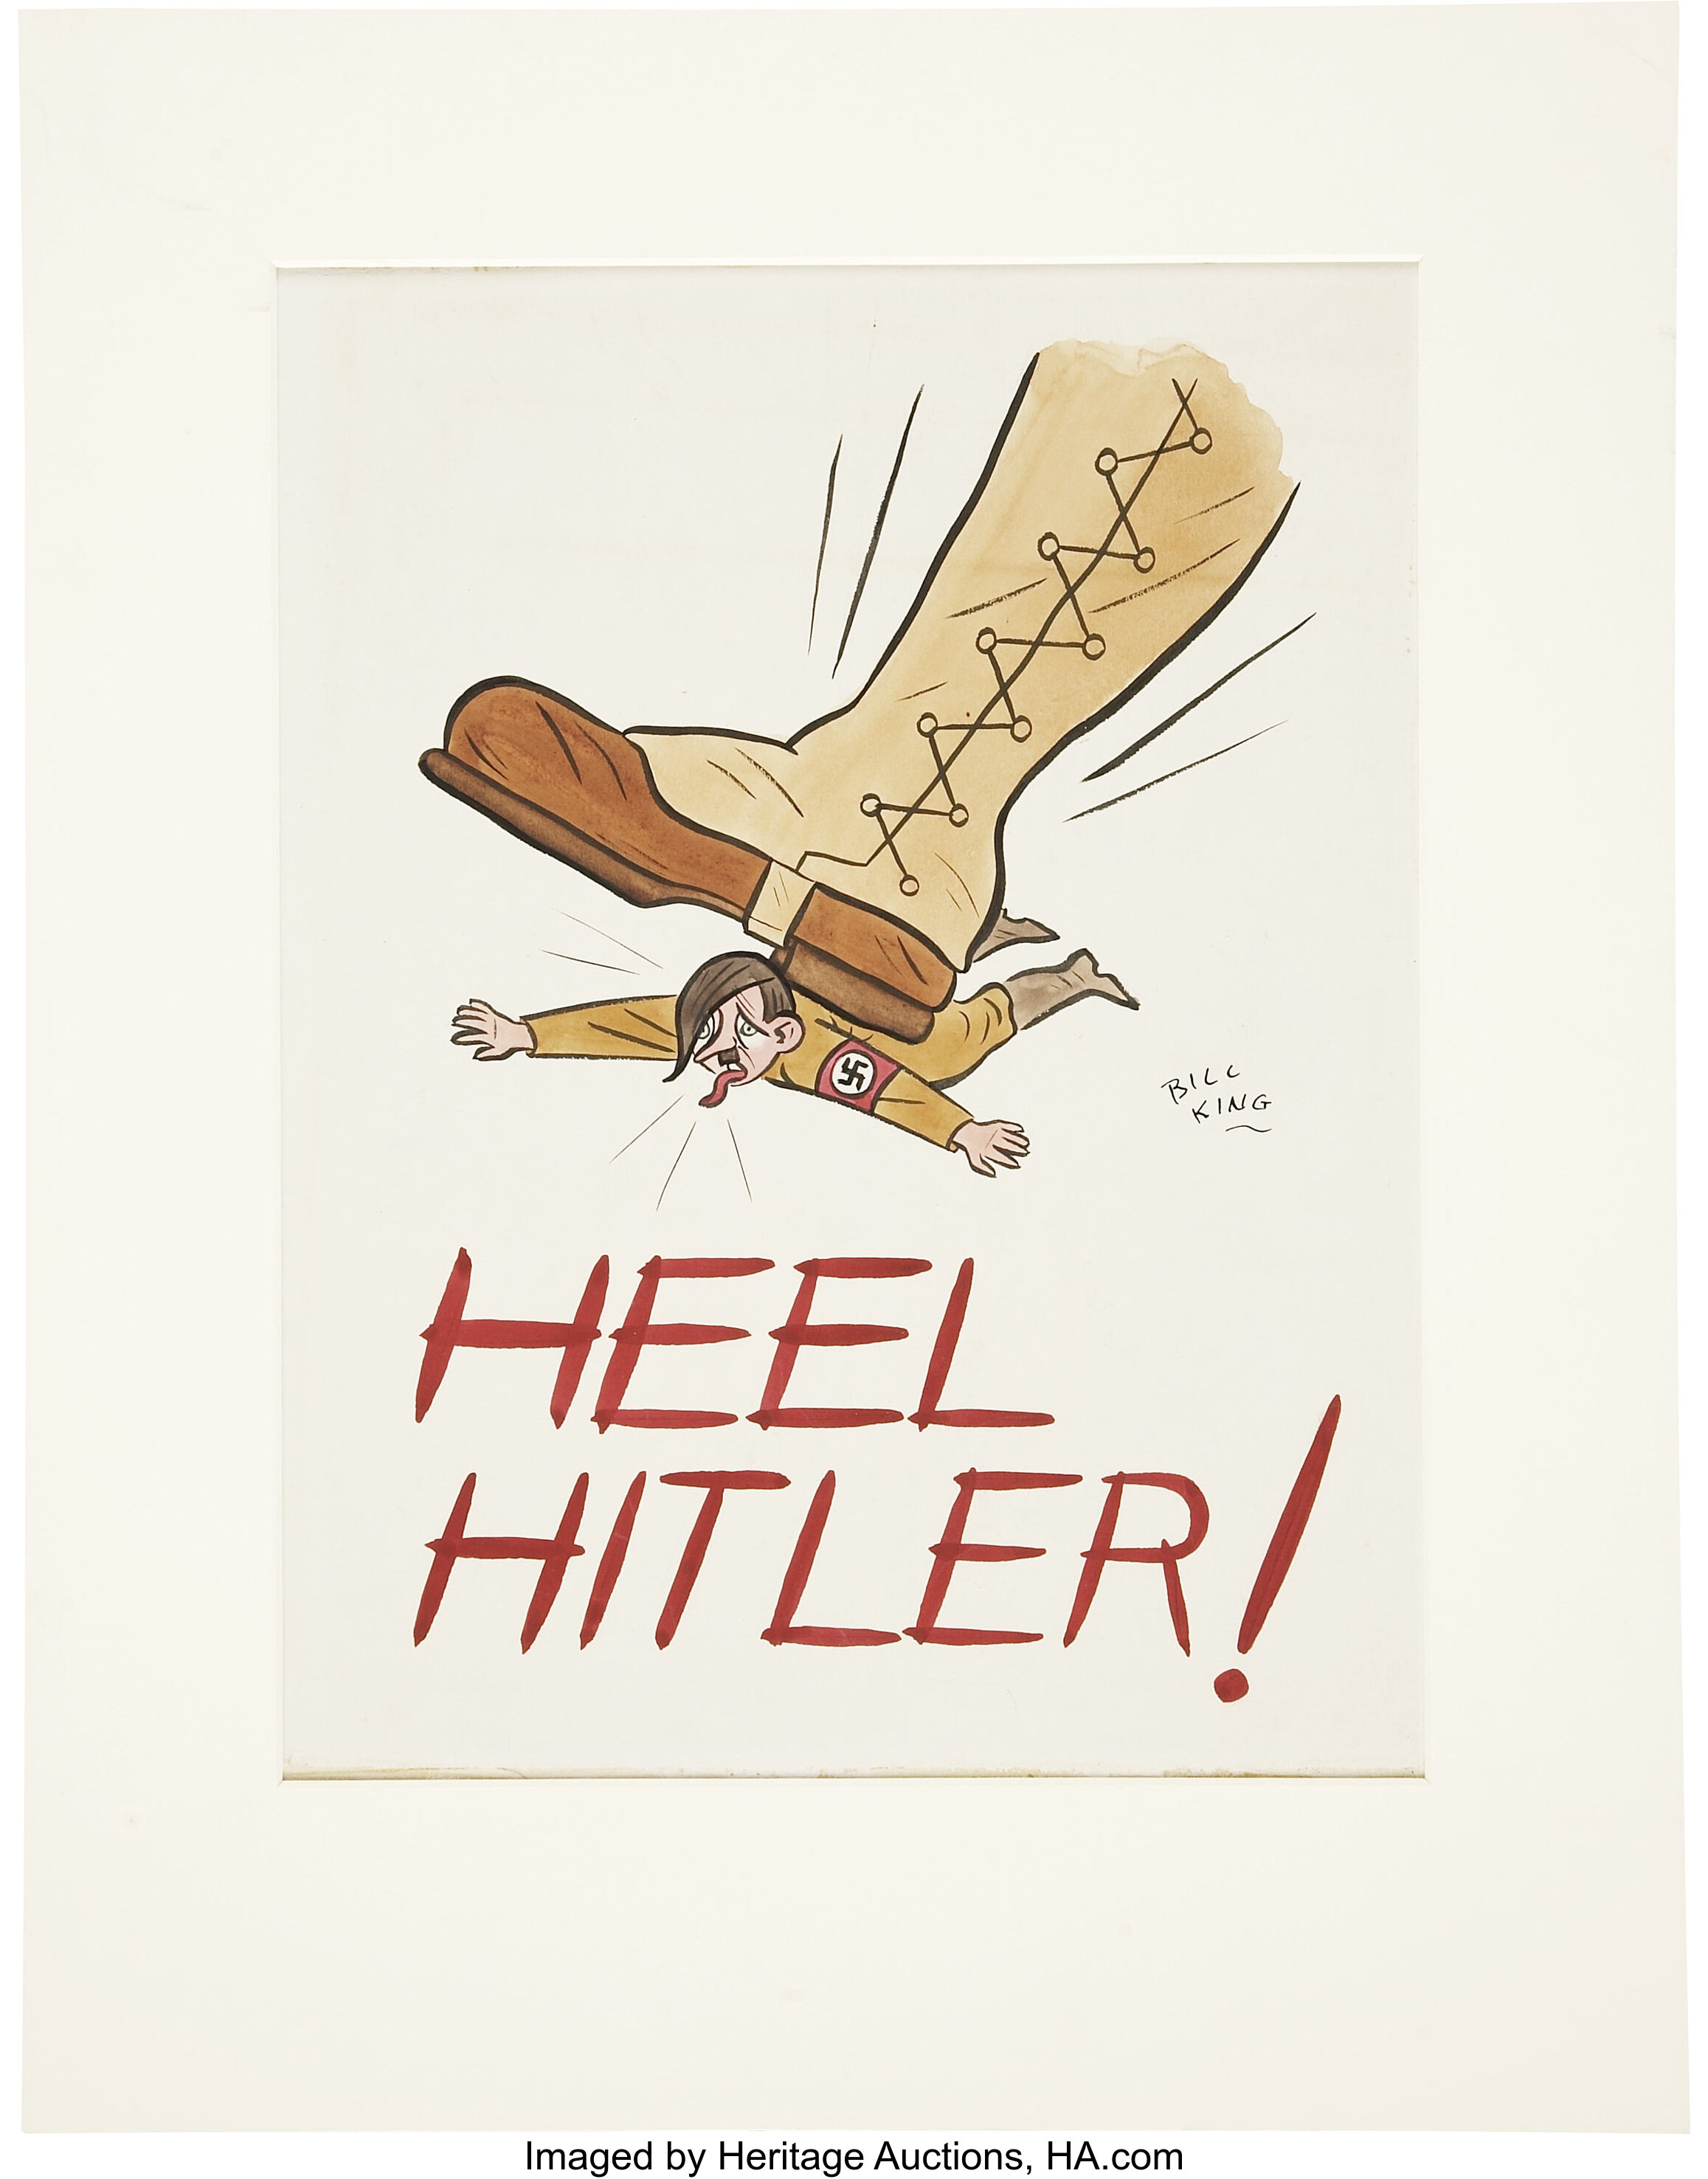 Bill King Heel Hitler Ww Ii Era Editorial Cartoon Illustration Lot 13726 Heritage Auctions